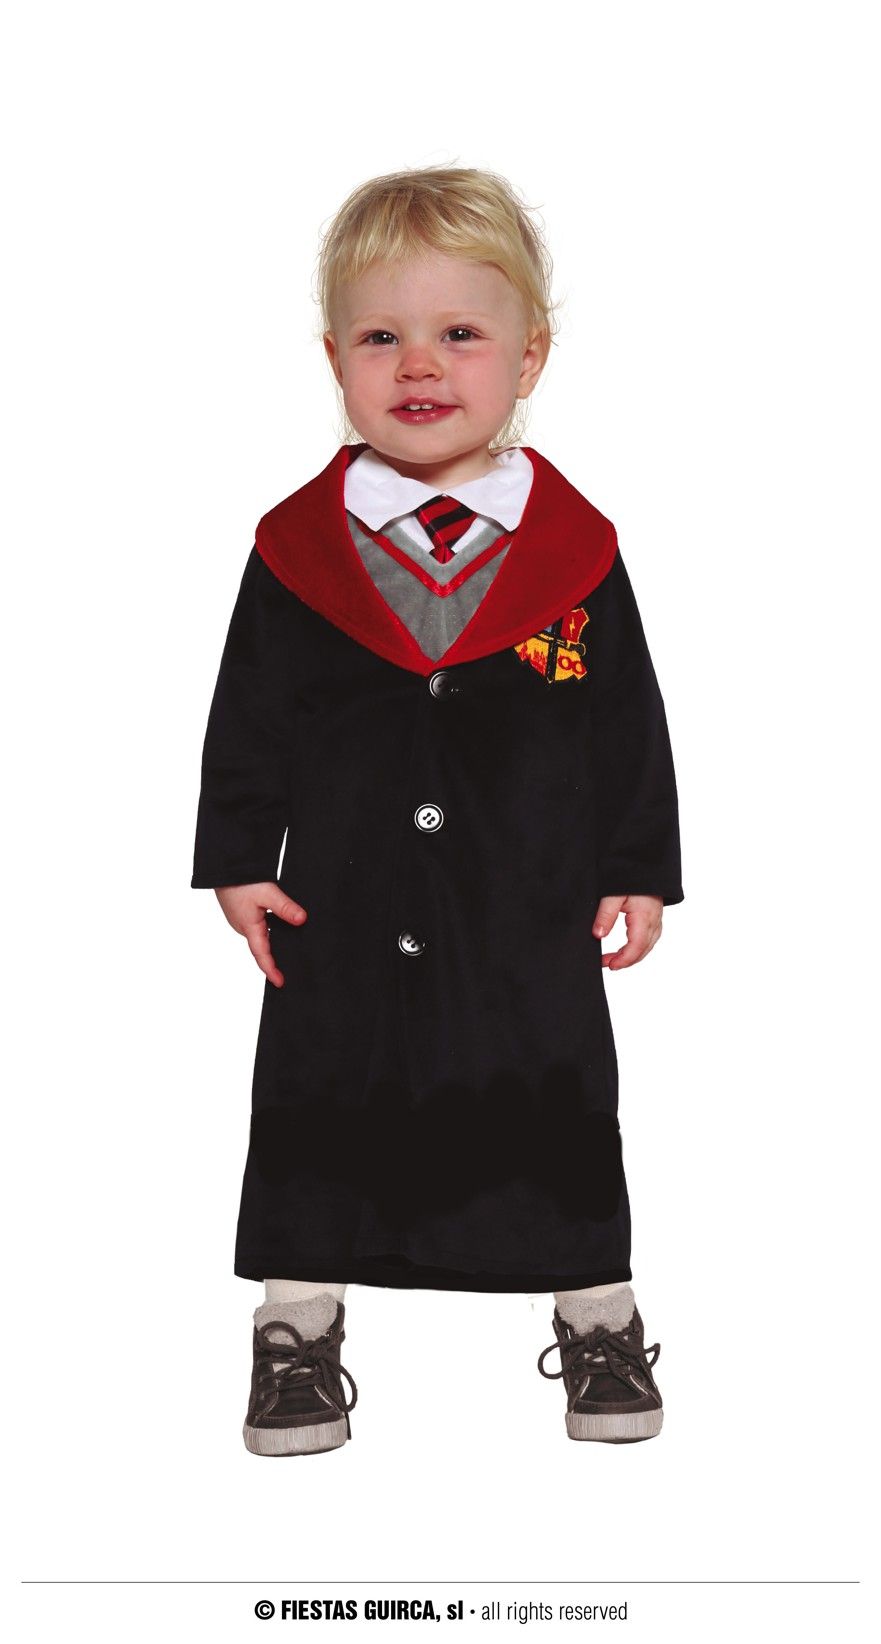 Disfraz Harry Potter Original Niño